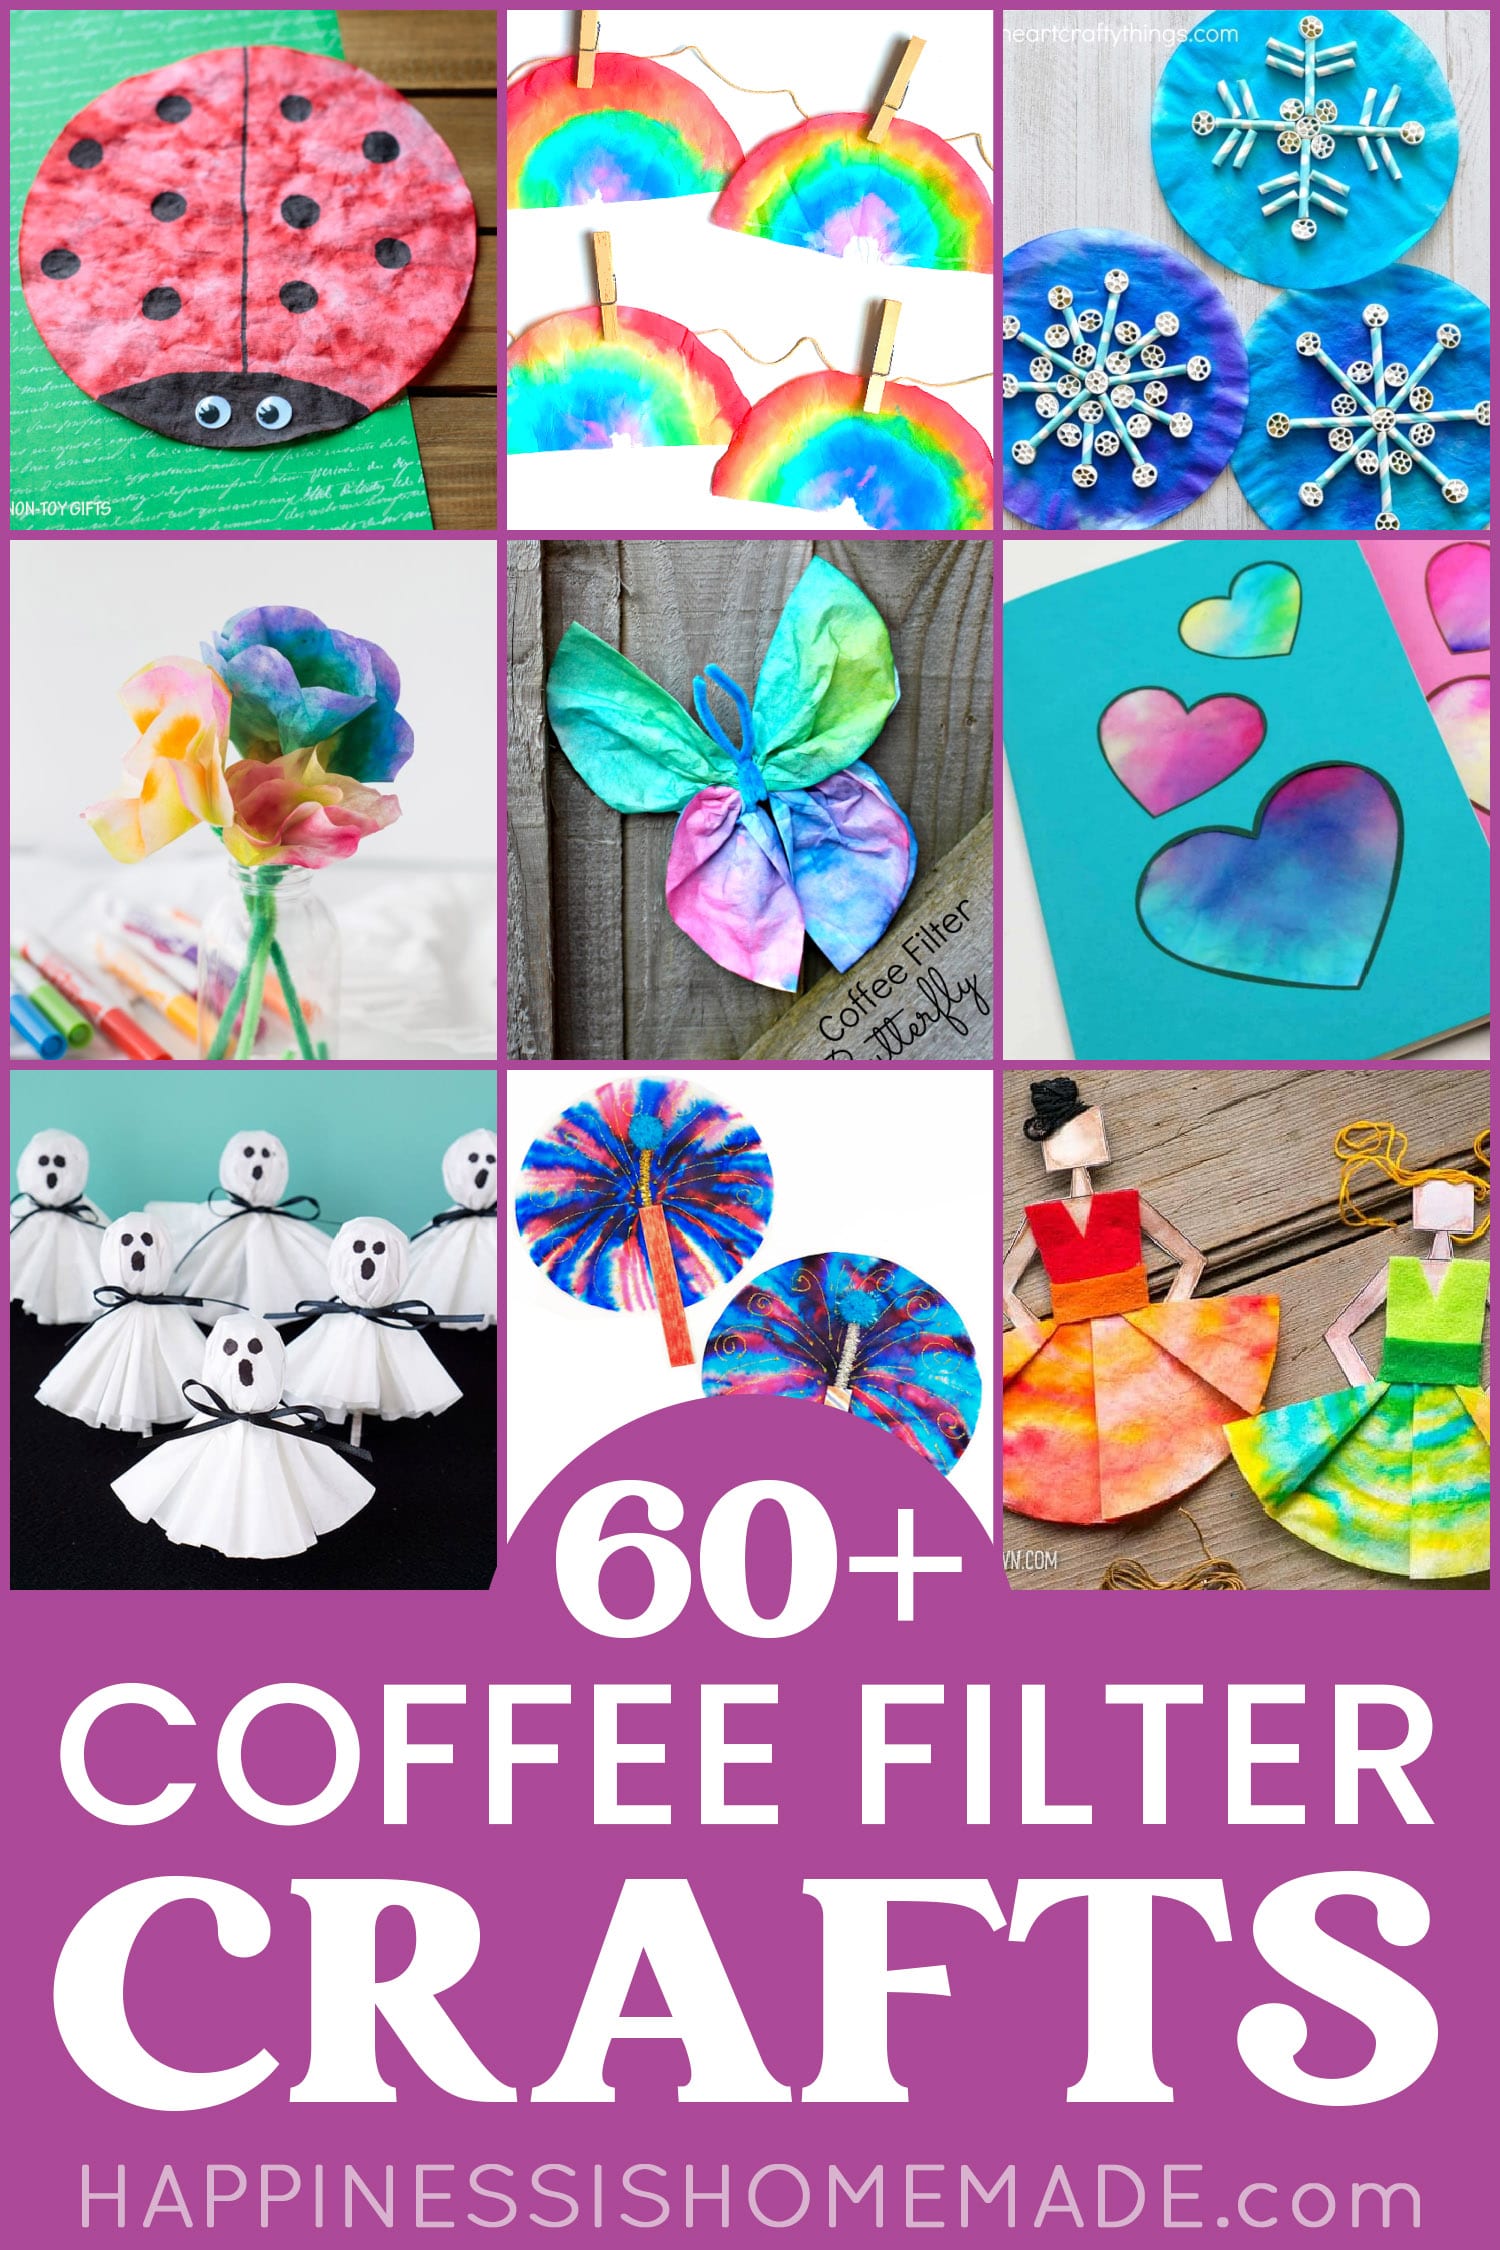 60+ Amazing Crafts for Teenage Girls - FeltMagnet